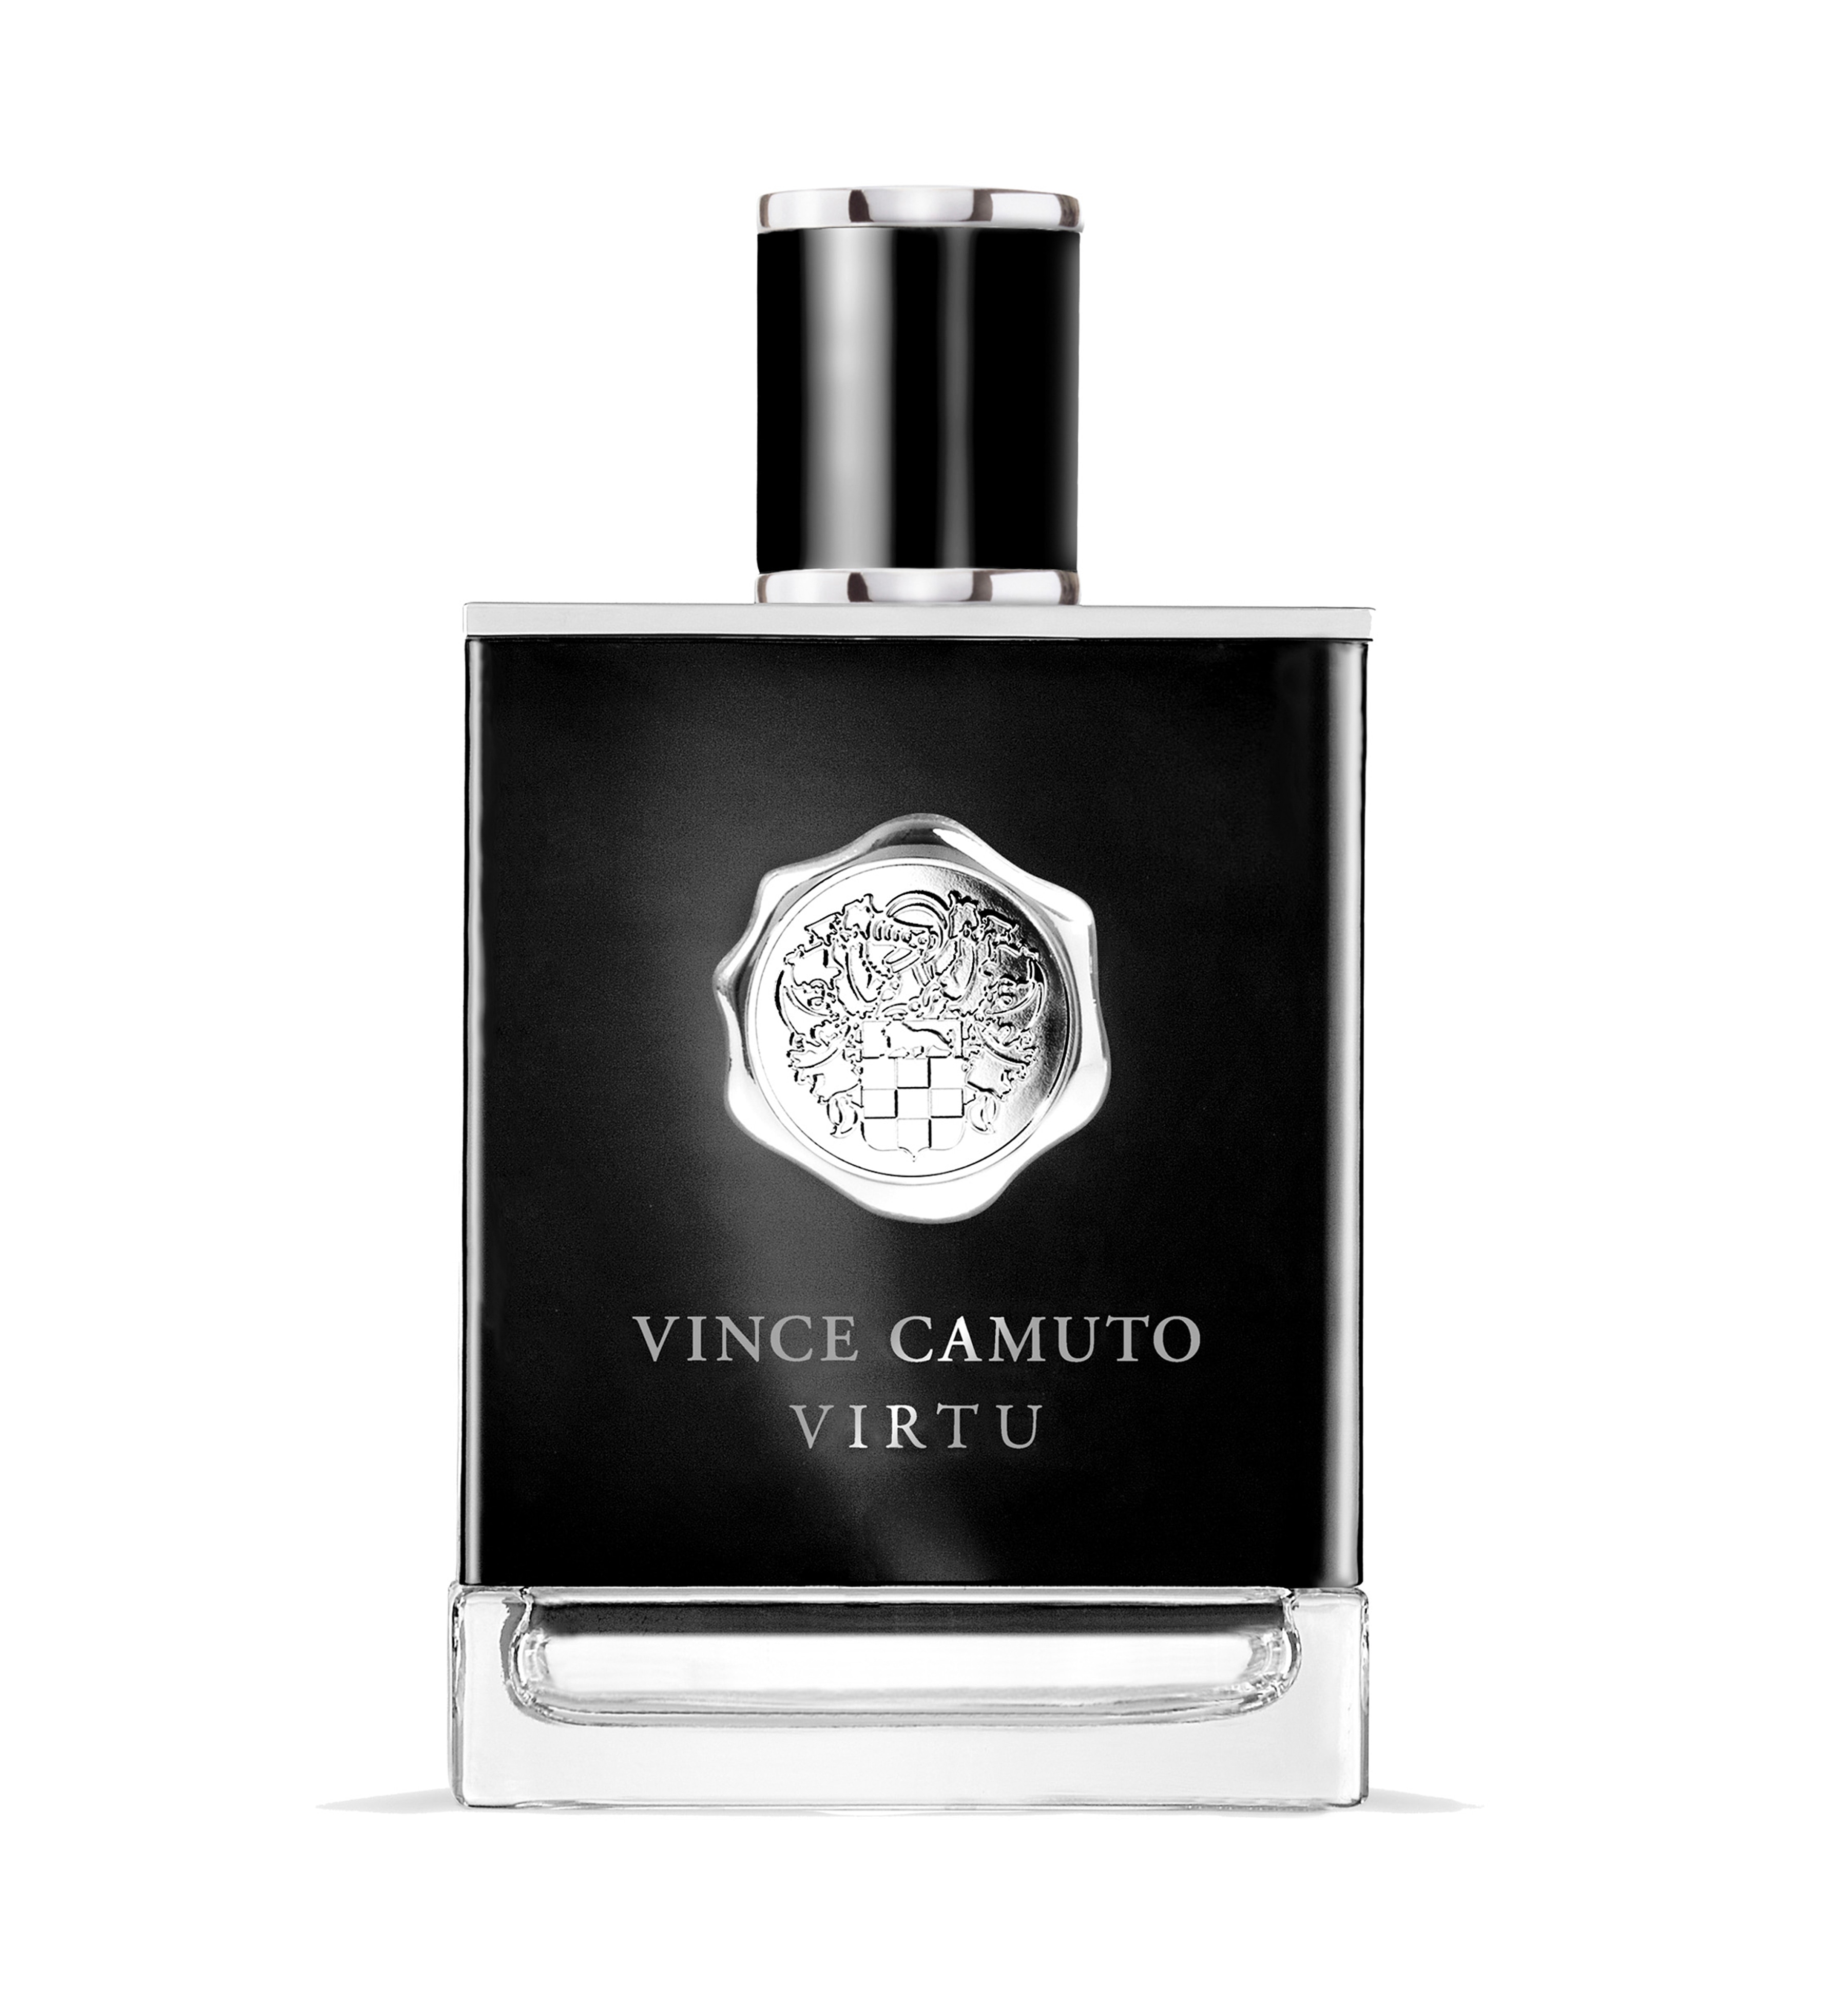 Vince Camuto Virtu: Santal 33 Goes to the Sea ~ Fragrance Reviews